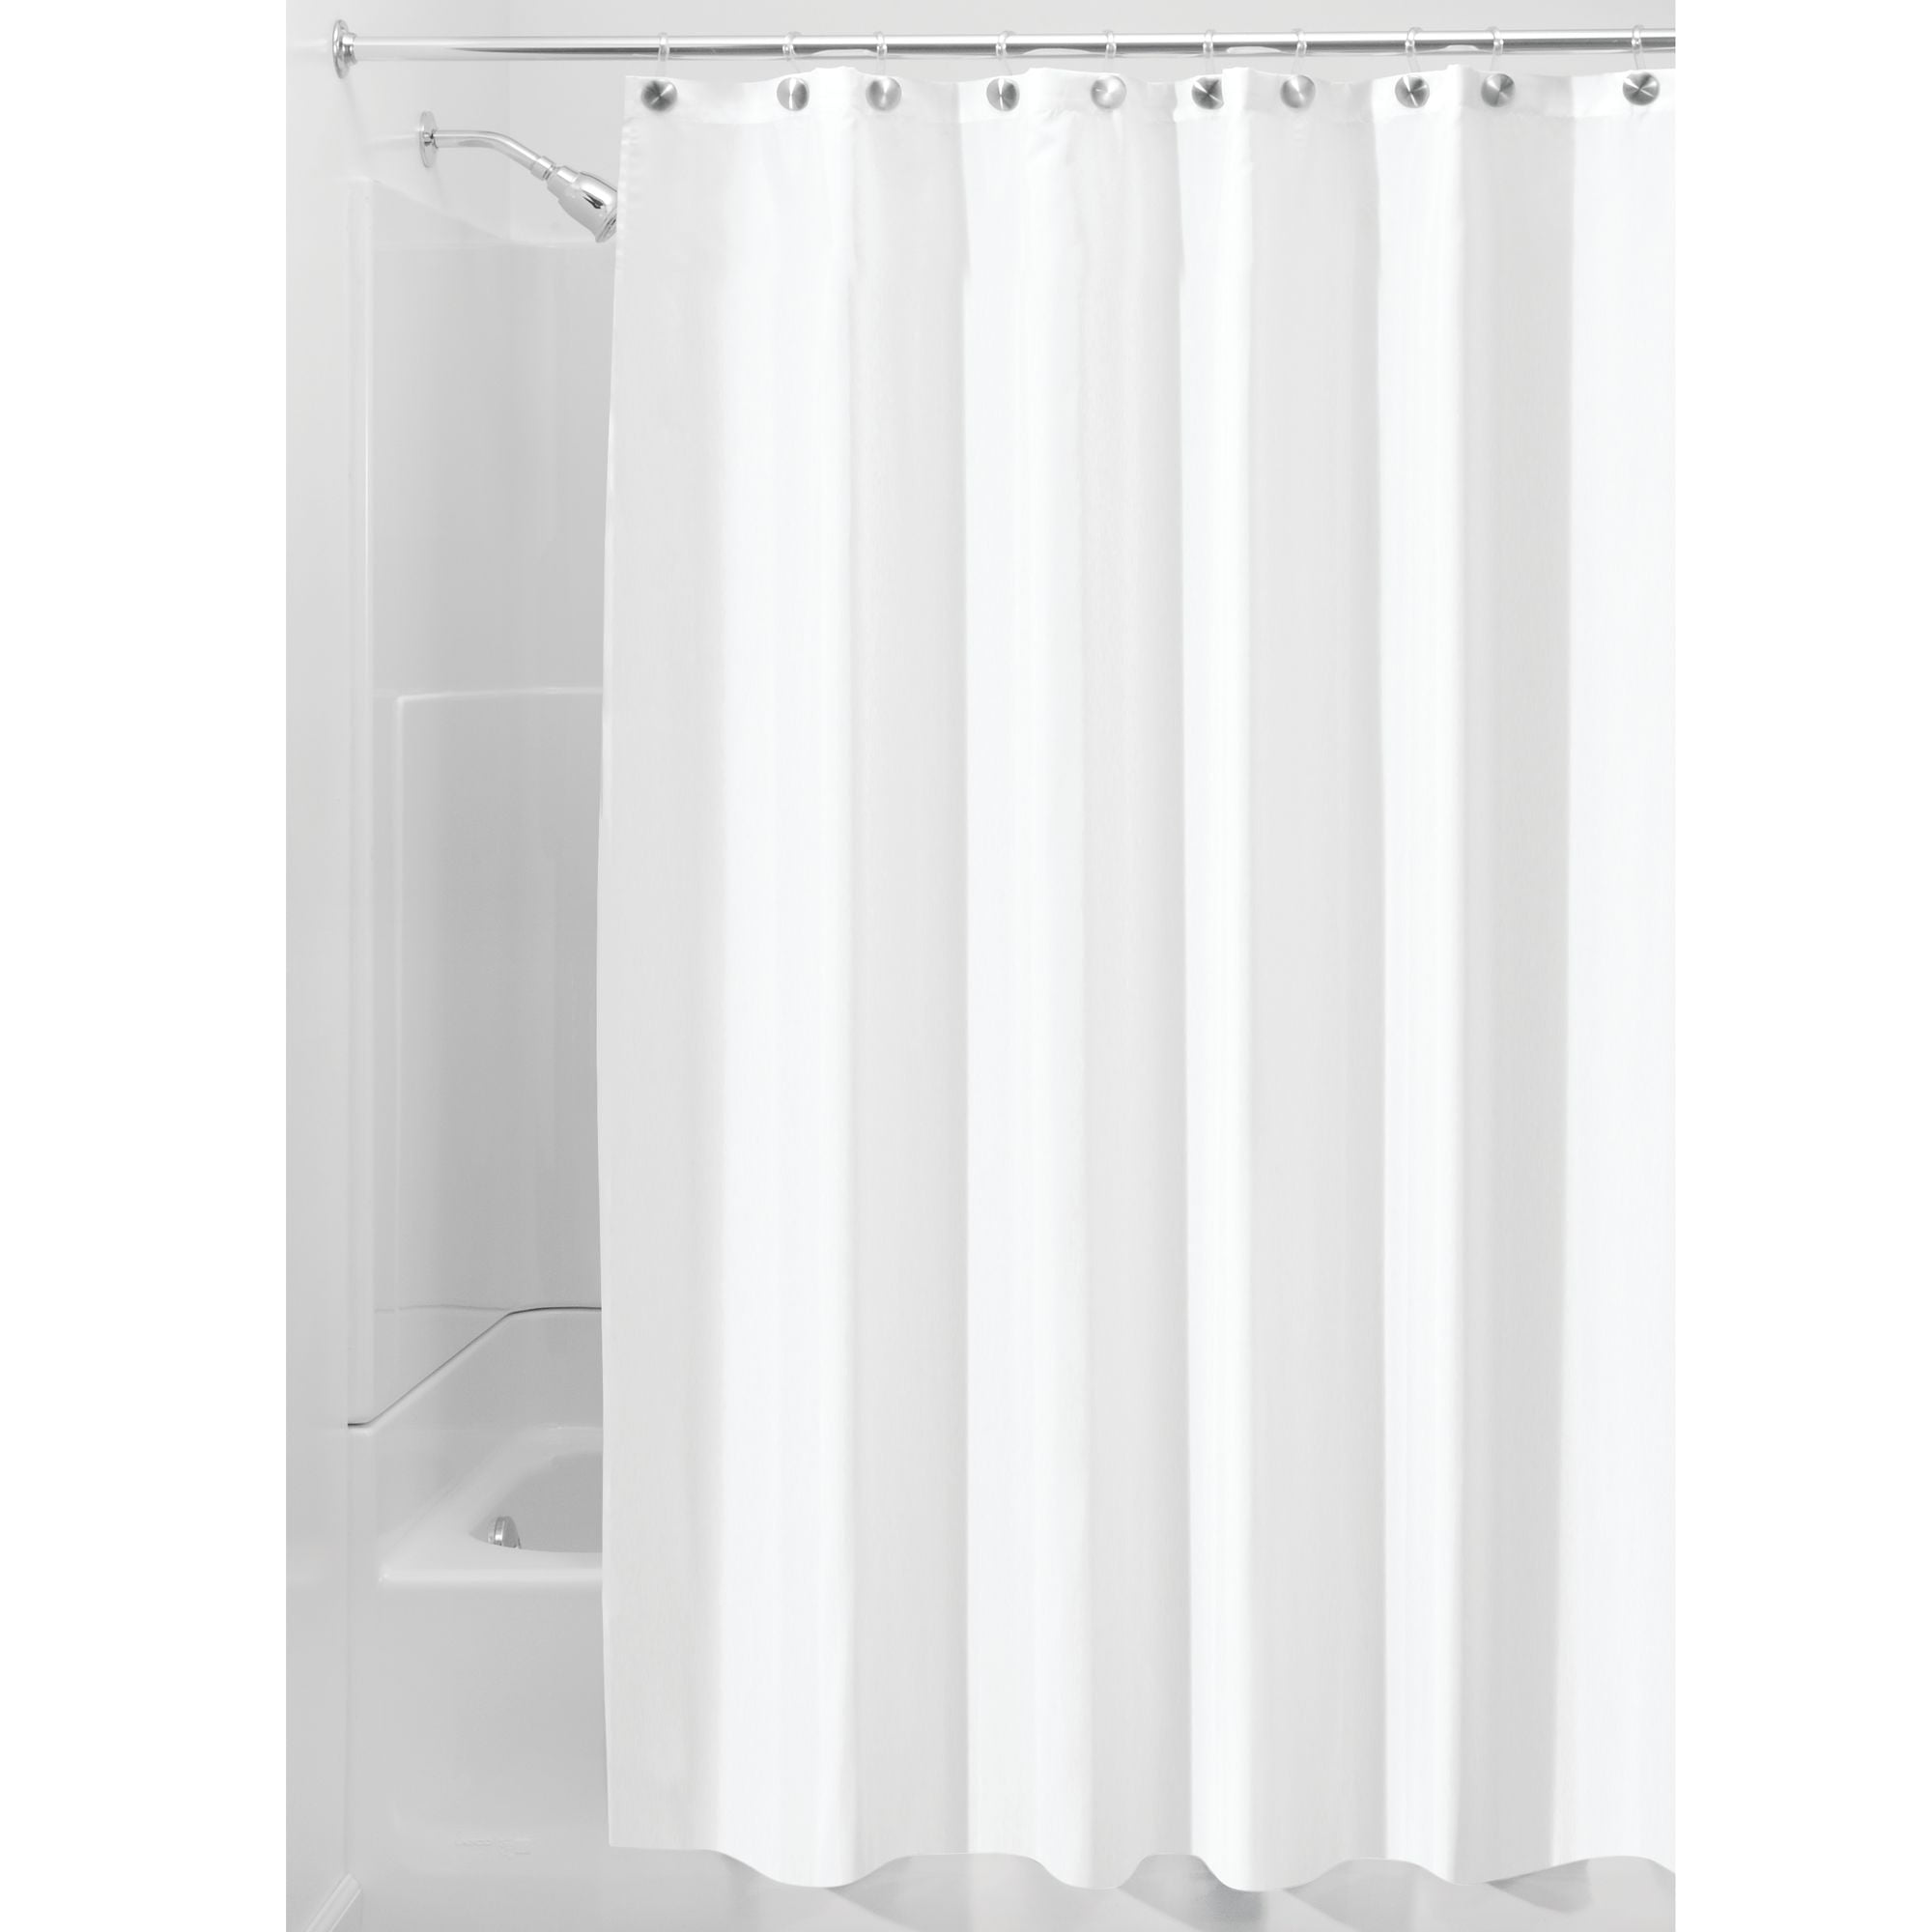 Interdesign Waterproof Fabric Shower, White Grommet Shower Curtain